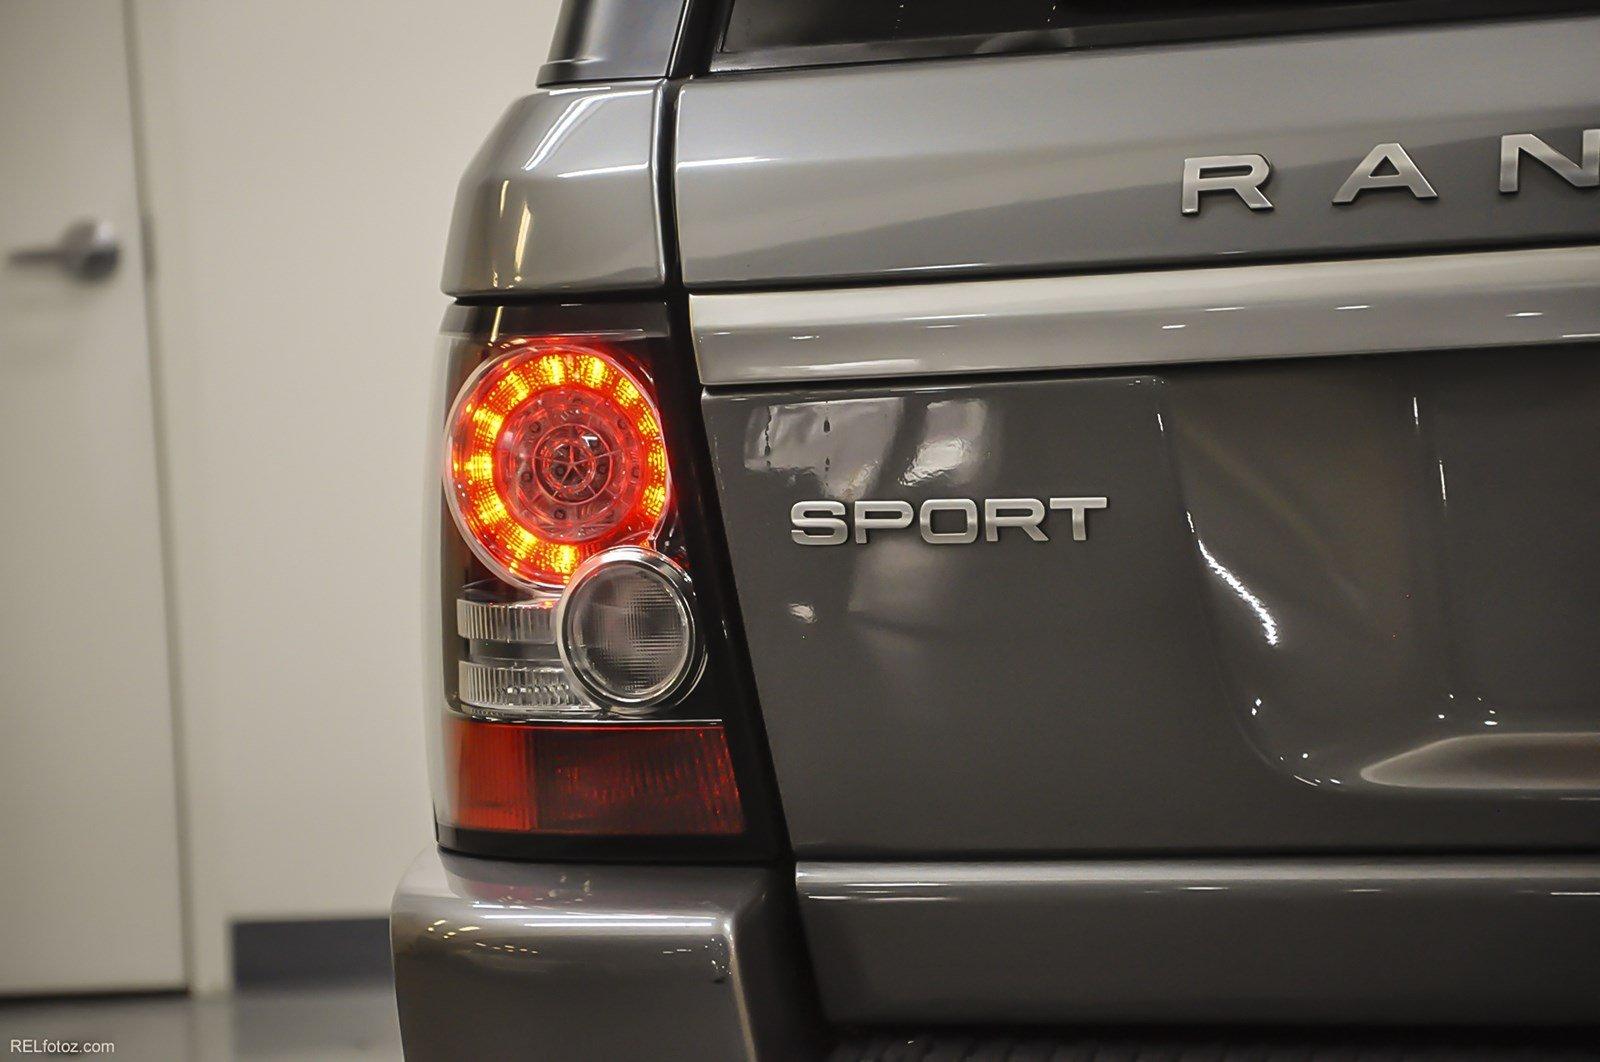 Used 2013 Land Rover Range Rover Sport HSE LUX for sale Sold at Gravity Autos Marietta in Marietta GA 30060 6